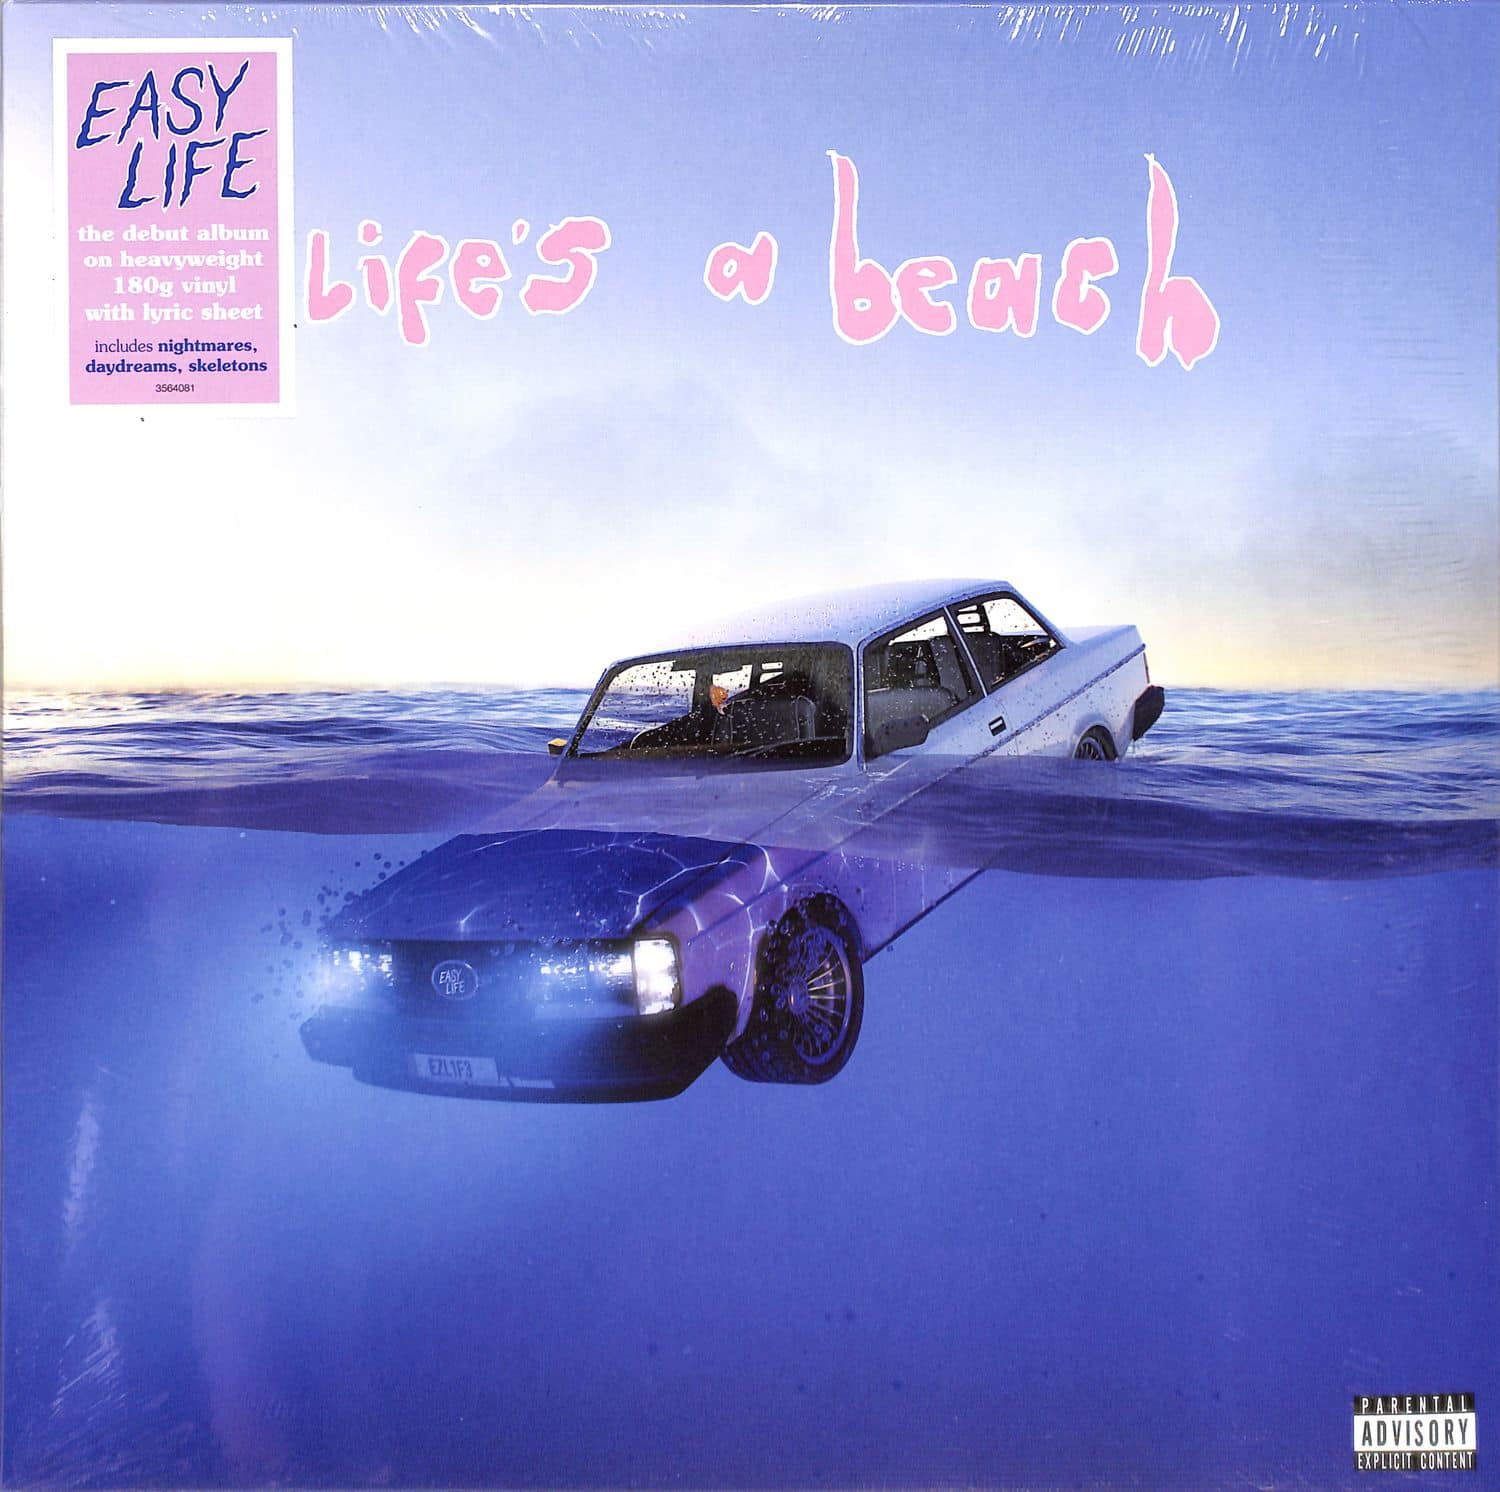 Easy Life - LIFES A BEACH 